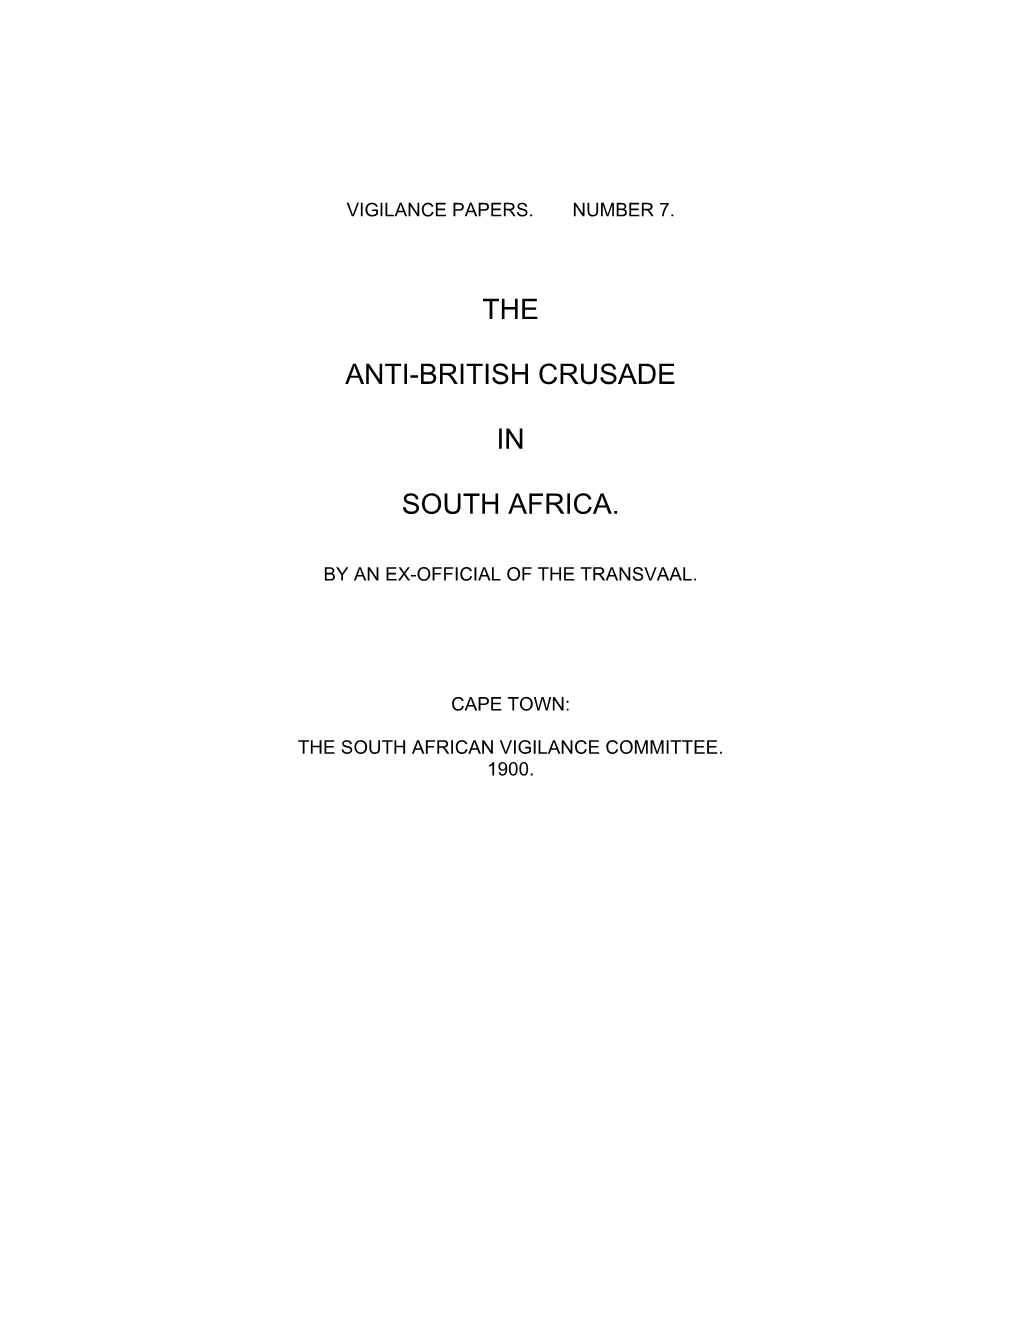 The Anti-British Crusade in South Africa